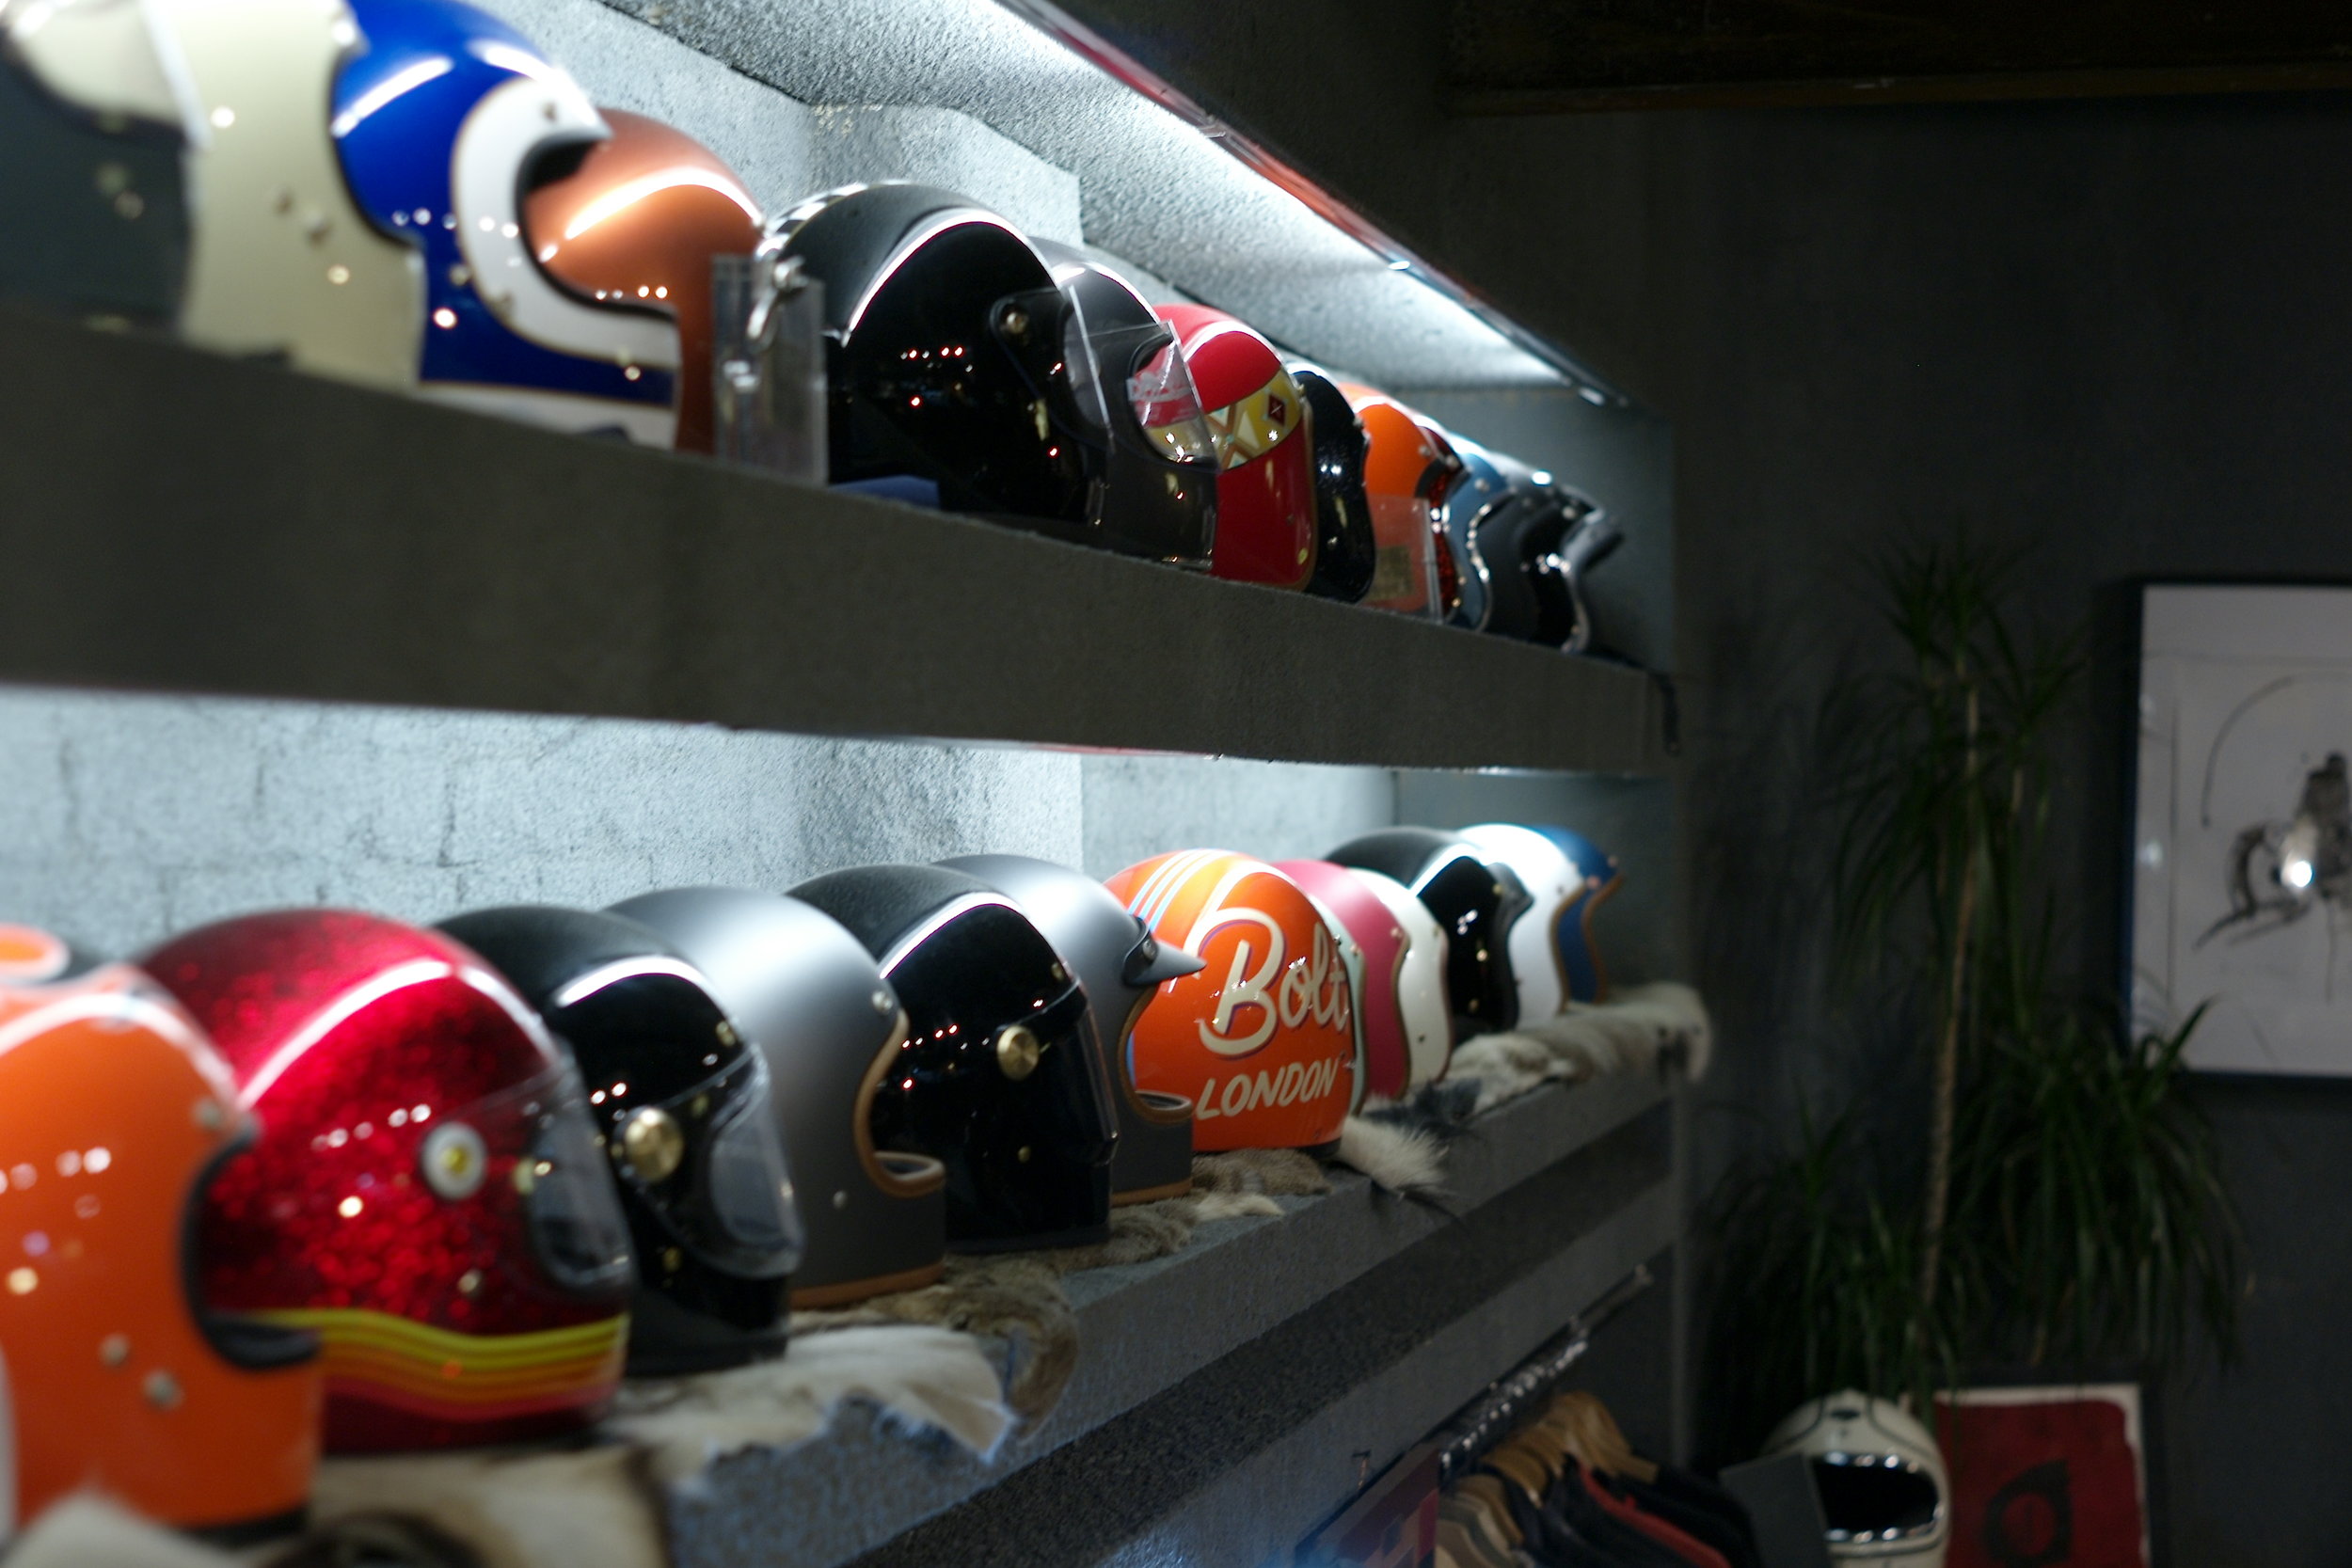 Casual snob - Bolt London Store Helmets Hedon Bell Biltwell.JPG